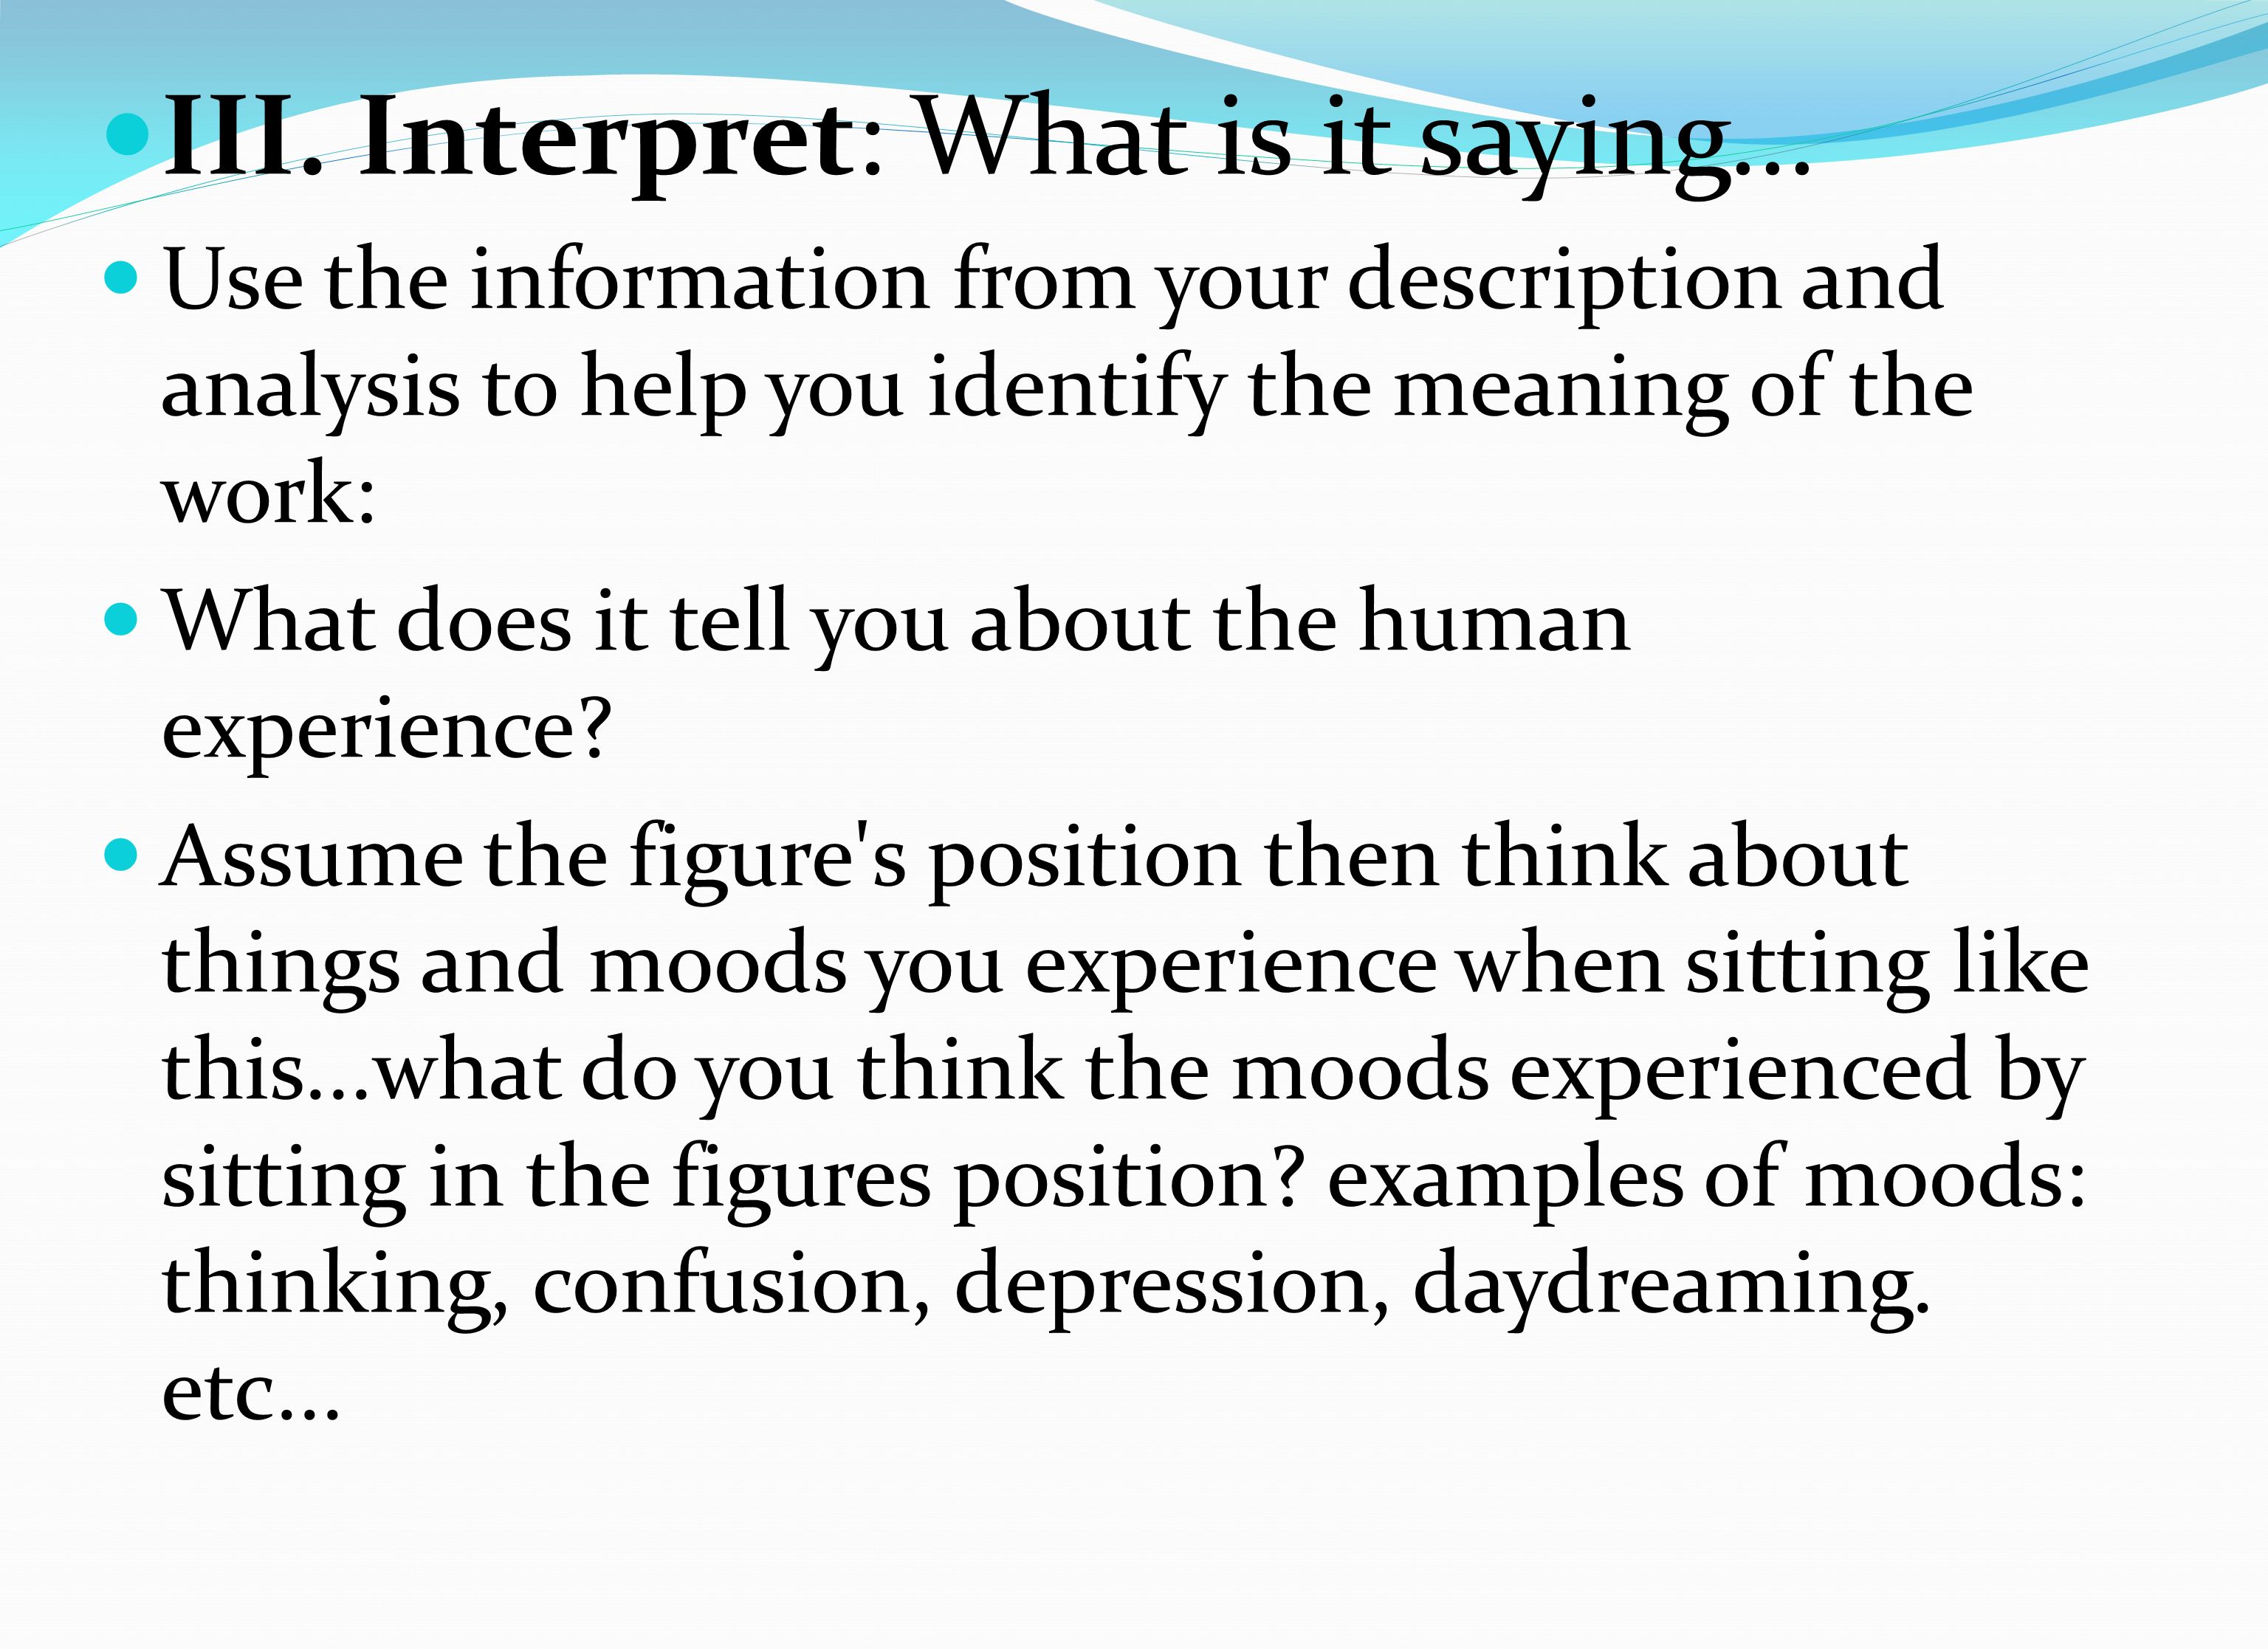 III. Interpret: What is it saying...